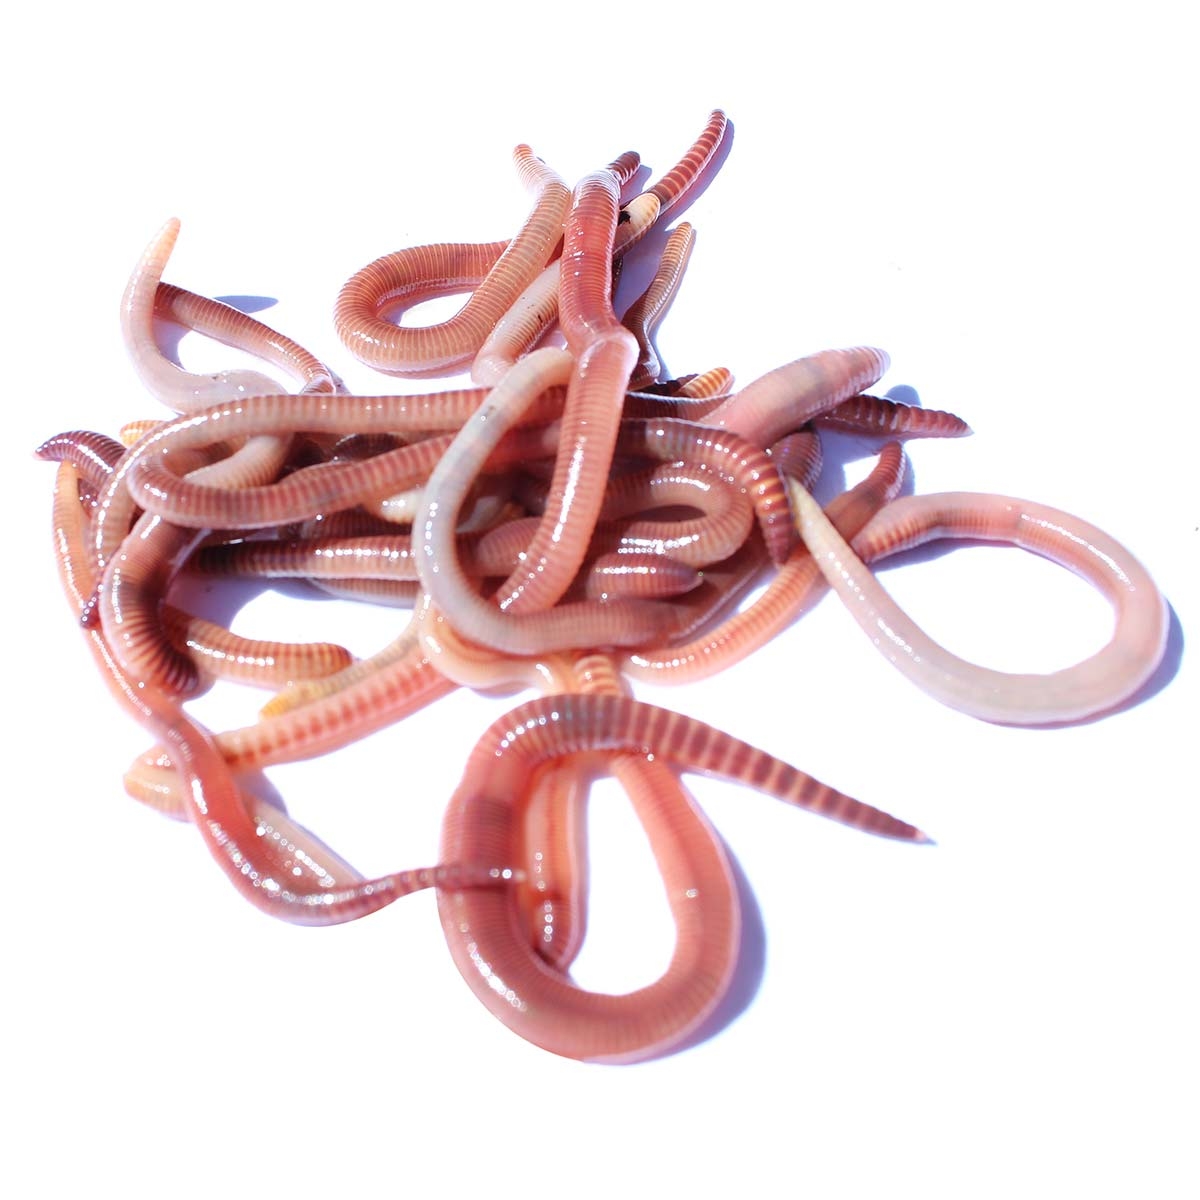 Medium Dendrobaenas Worms - Live Fresh Fishing Bait